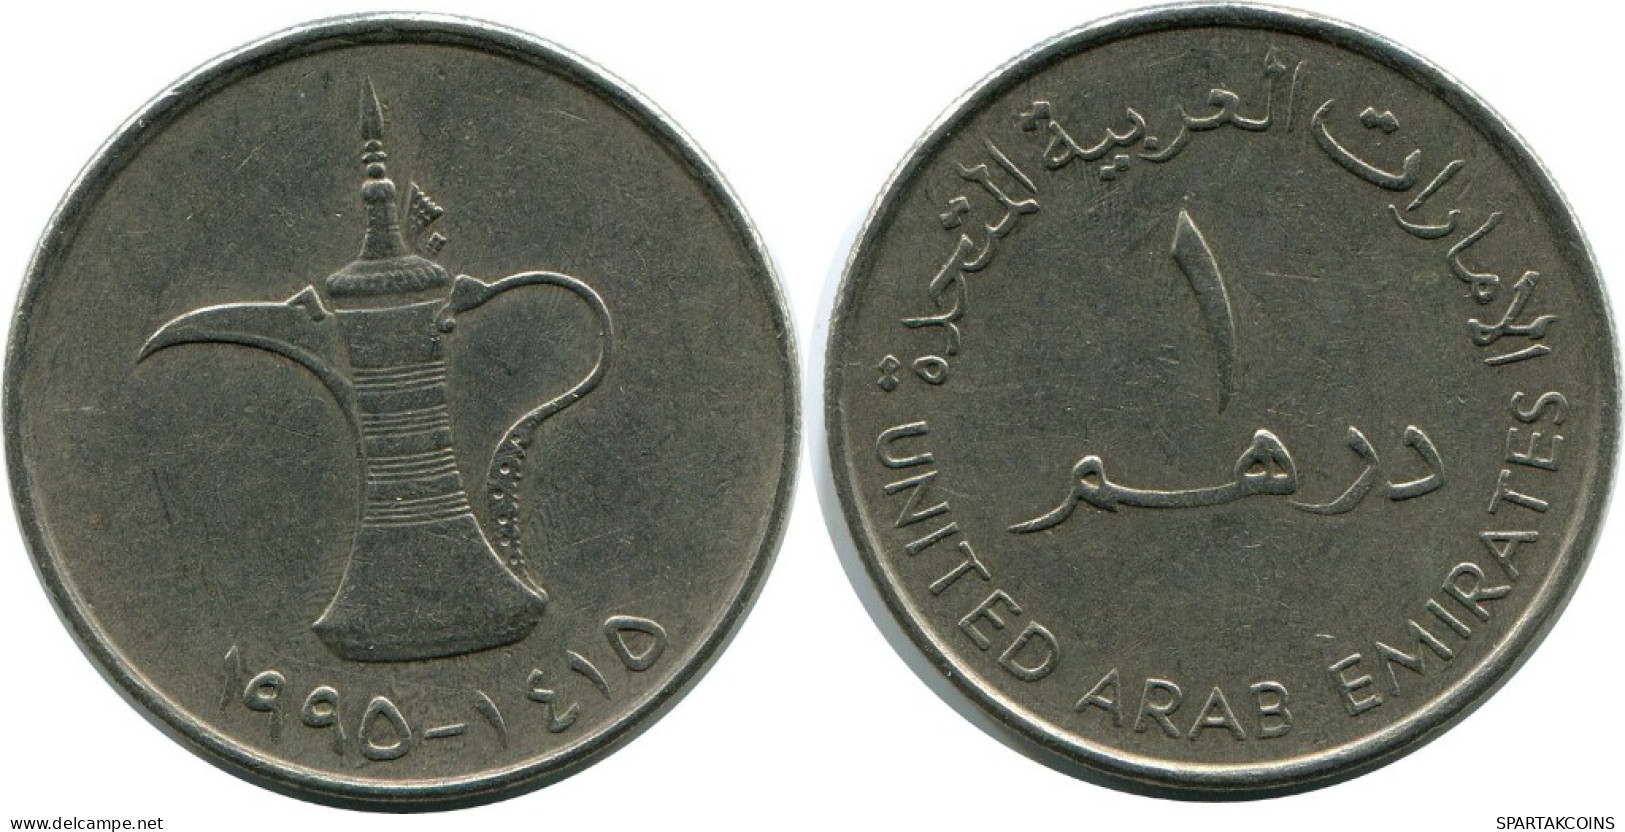 1 DIRHAM 1990 UAE UNITED ARAB EMIRATES Islamic Coin #AH994.U.A - Verenigde Arabische Emiraten